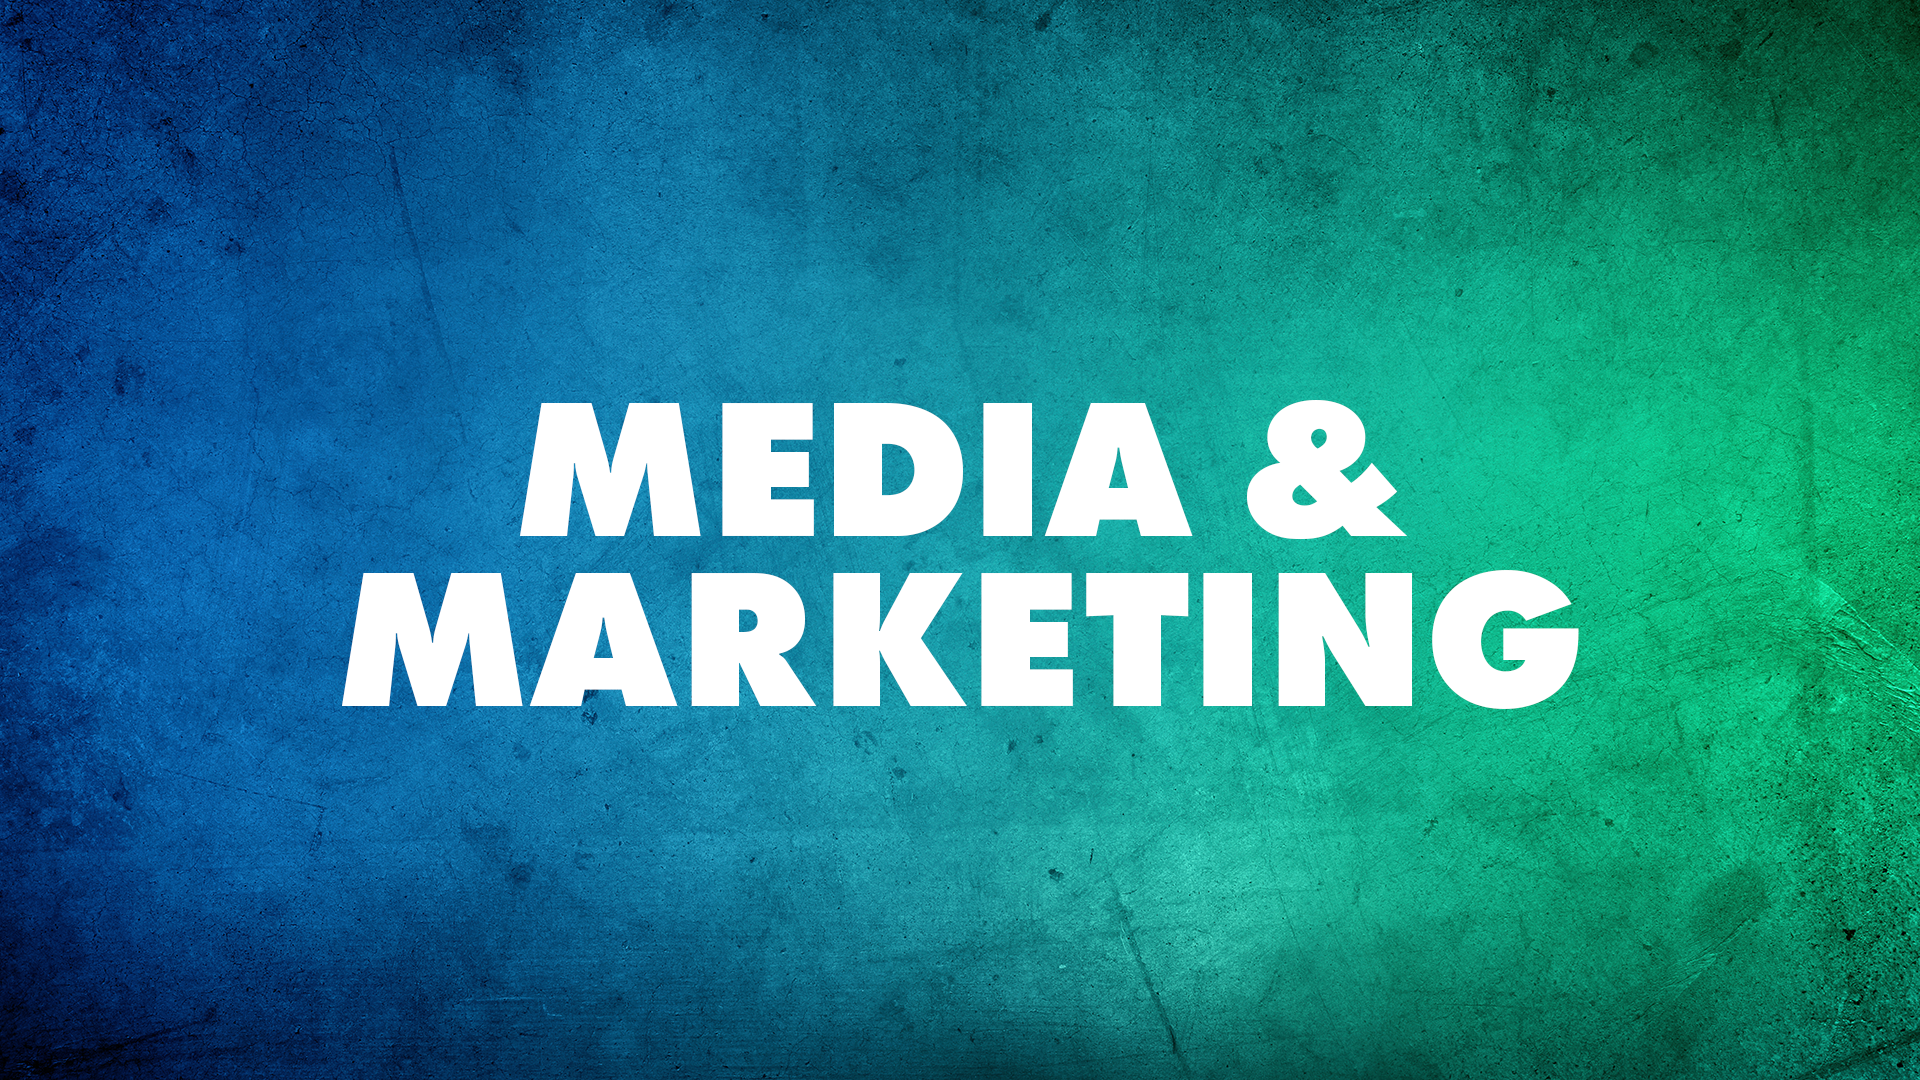 Media & Marketing Committee Meeting social media marketing